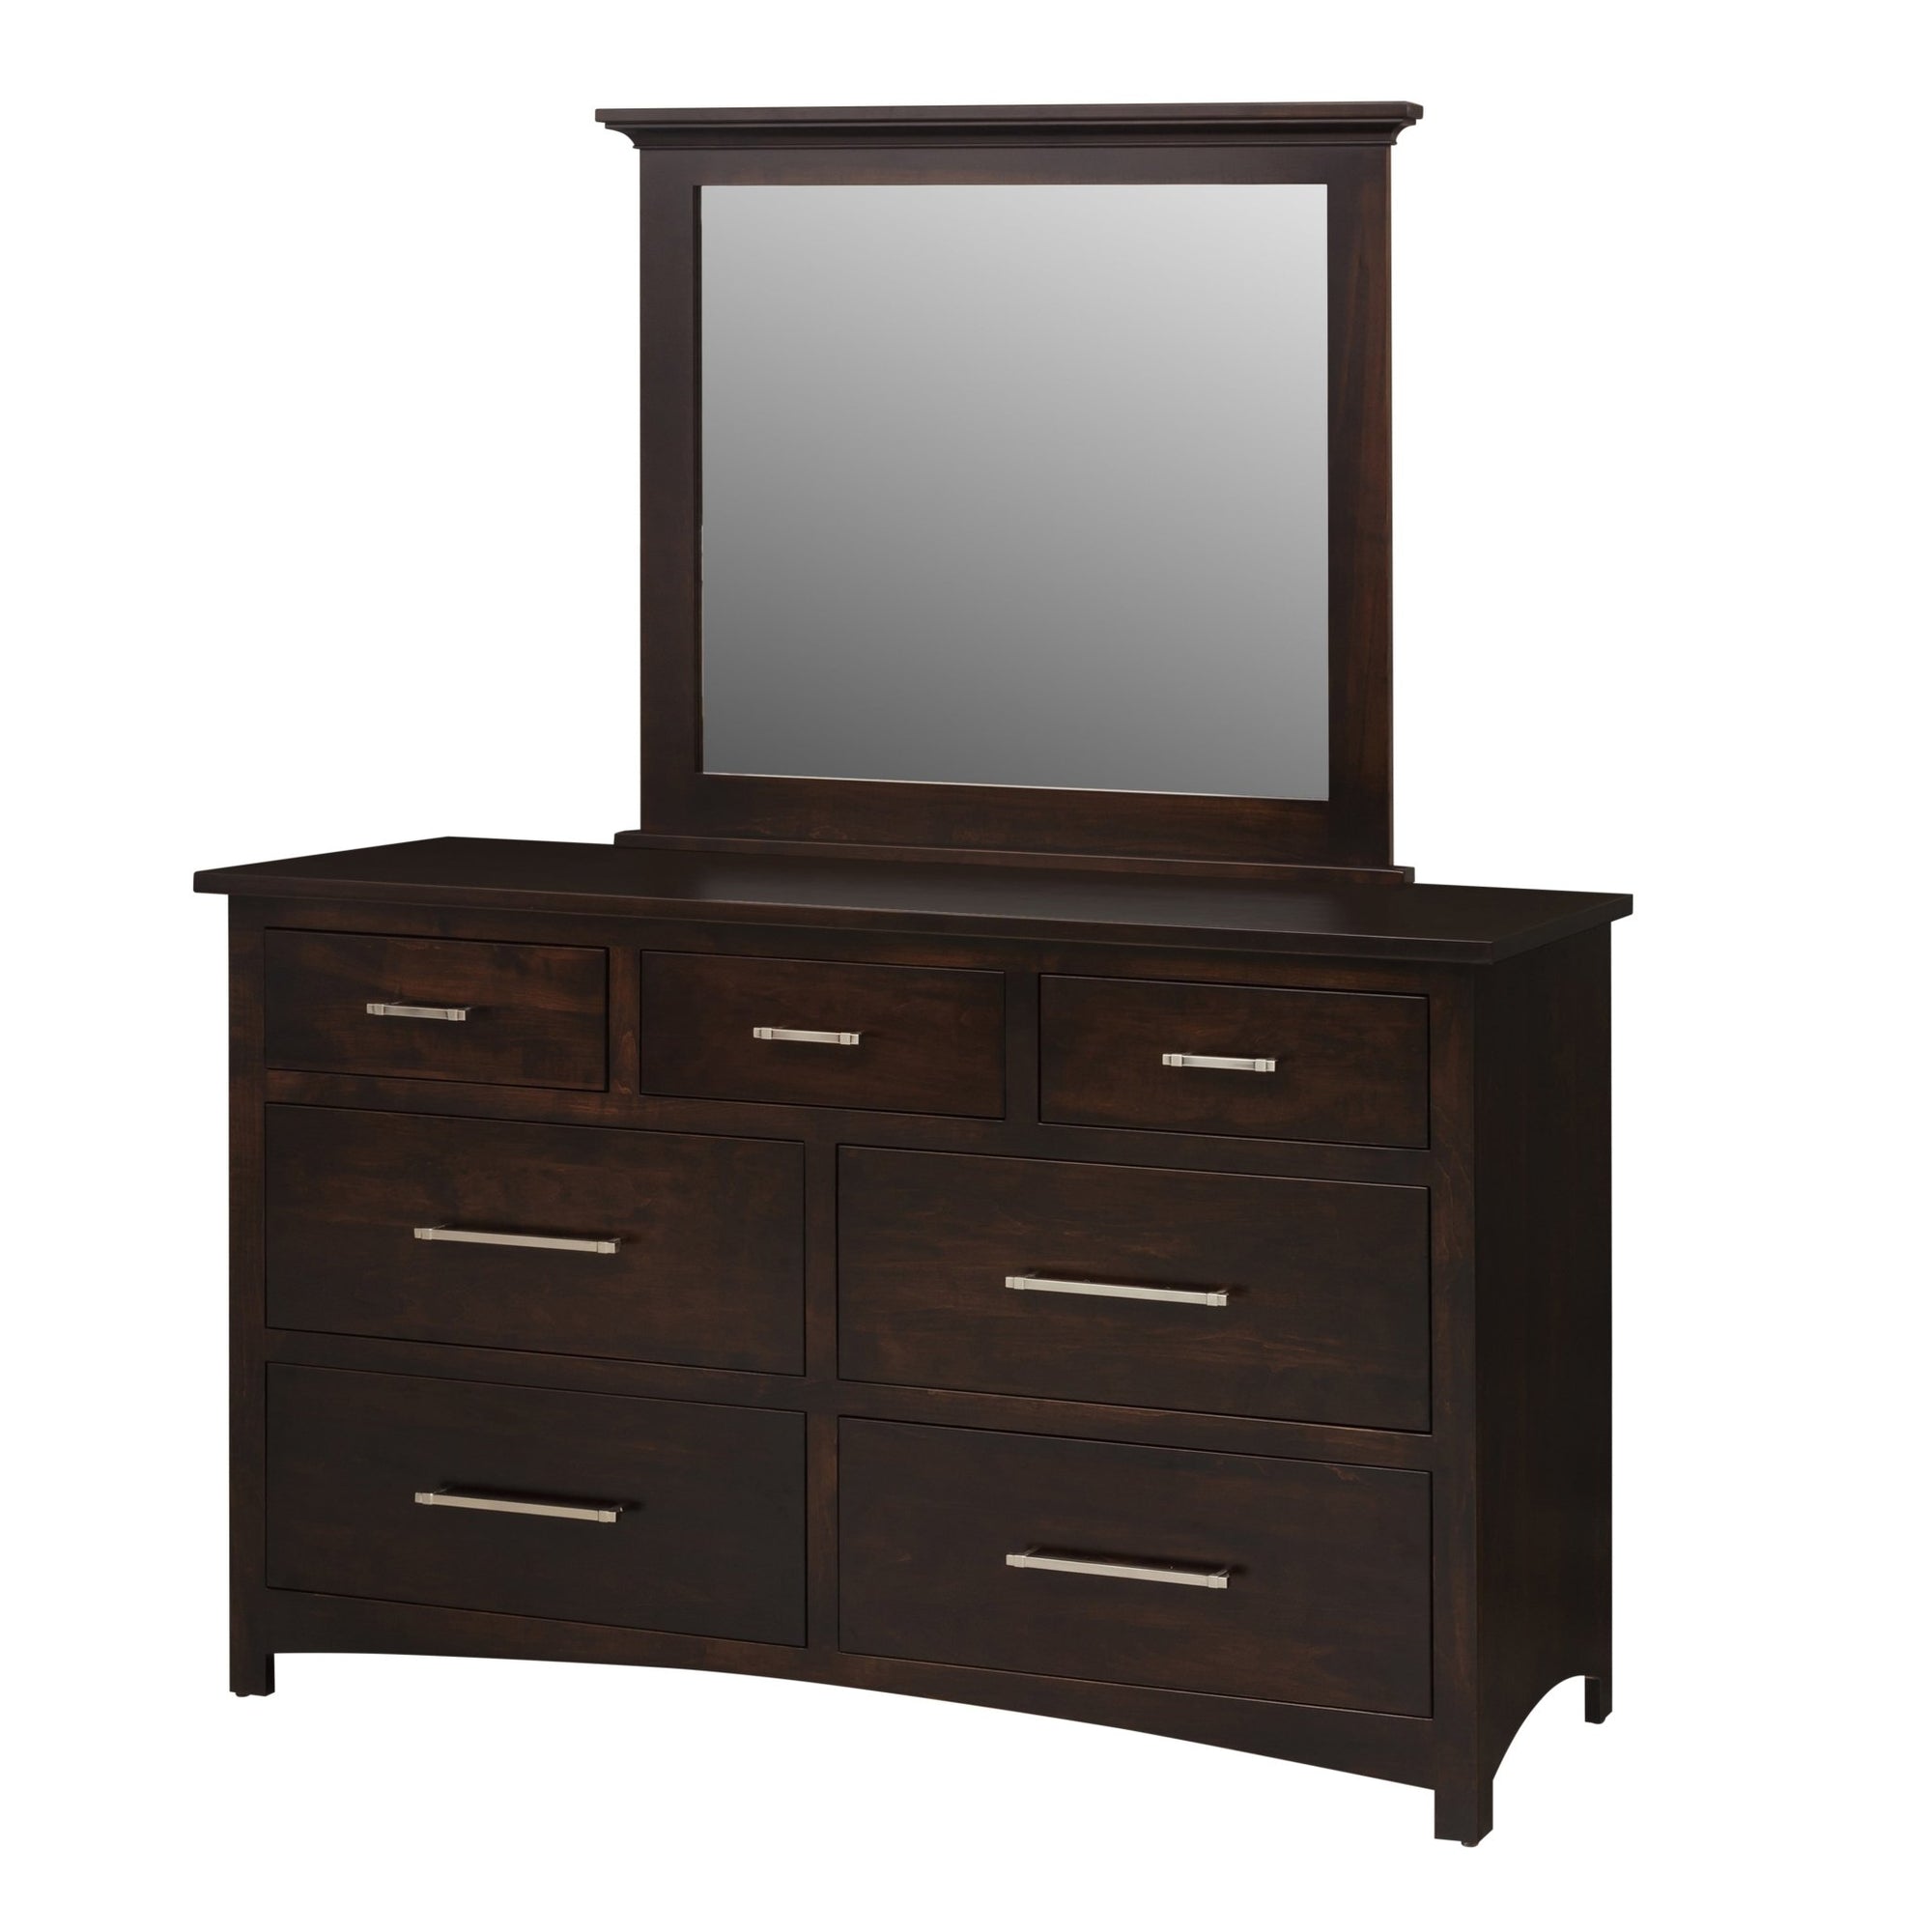 Avondale Mirror (for 38"high dresser) - snyders.furniture